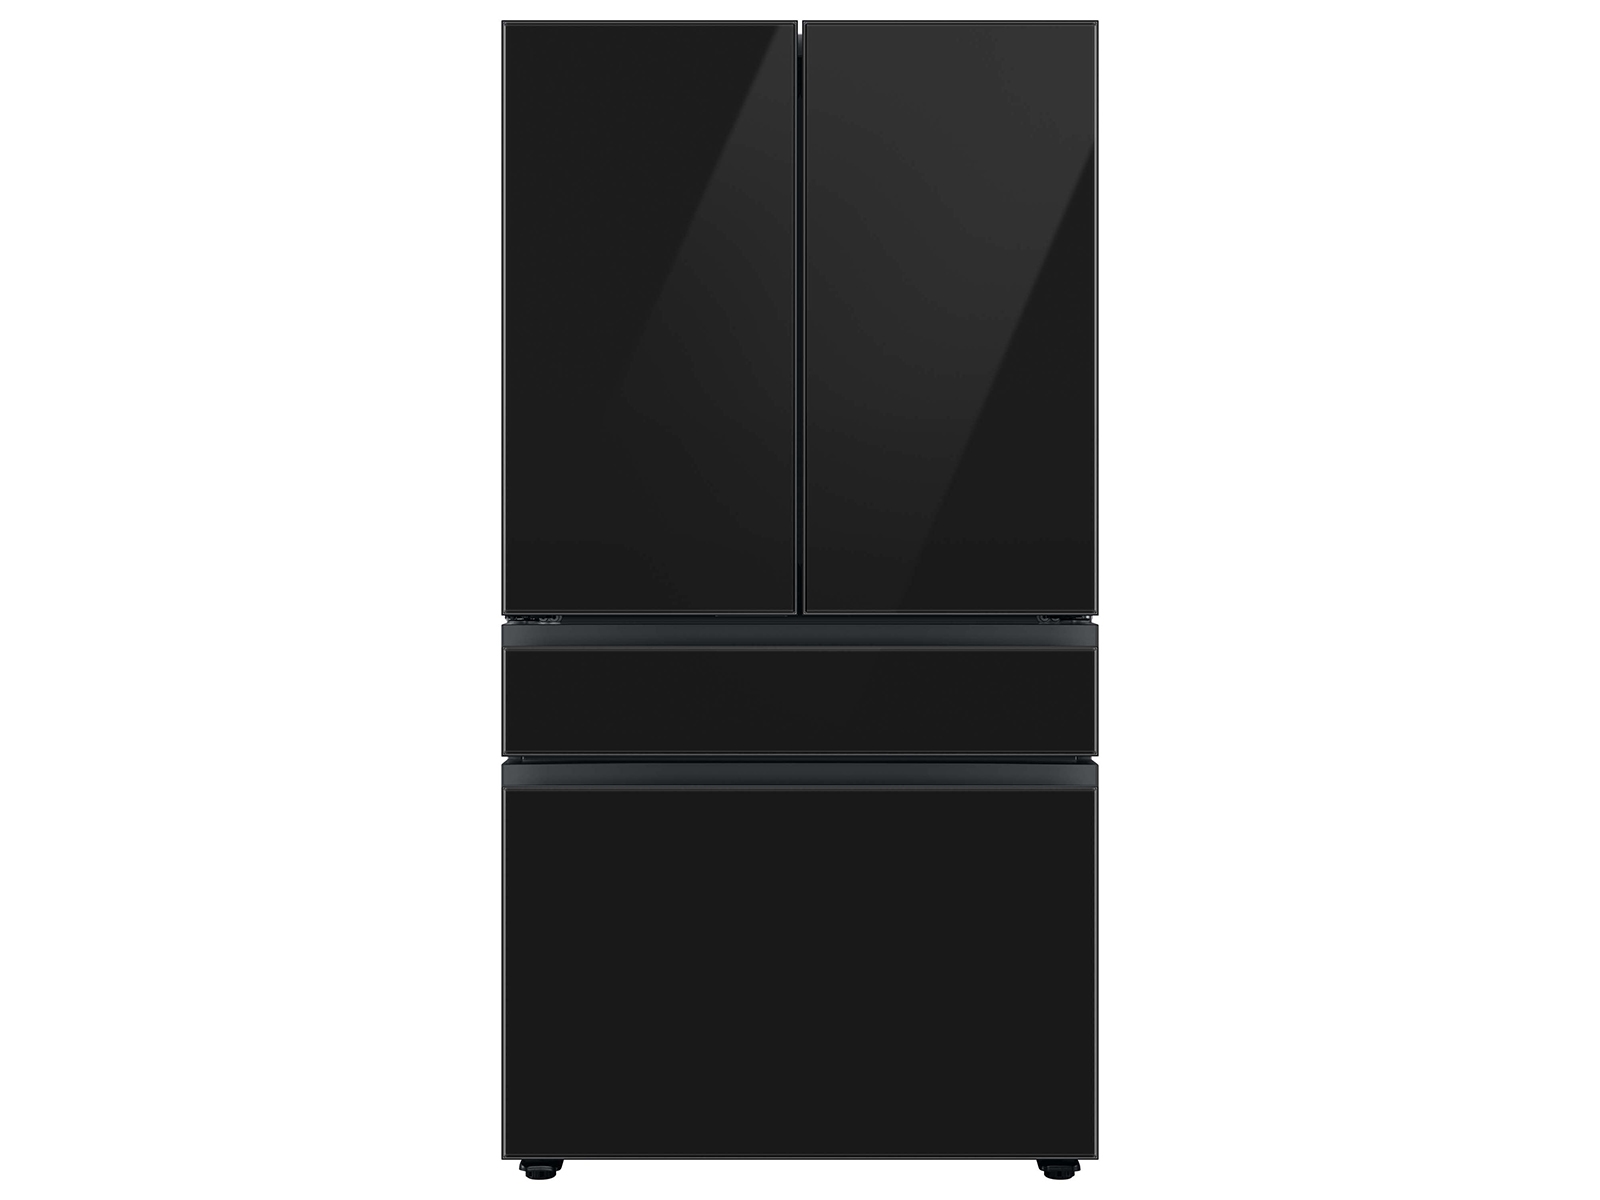 Samsung Bespoke 4-Door French Door Refrigerator in White Glass (23 cu. ft.) with Customizable Door Panel Colors and Beverage Center™ in Charcoal Glass